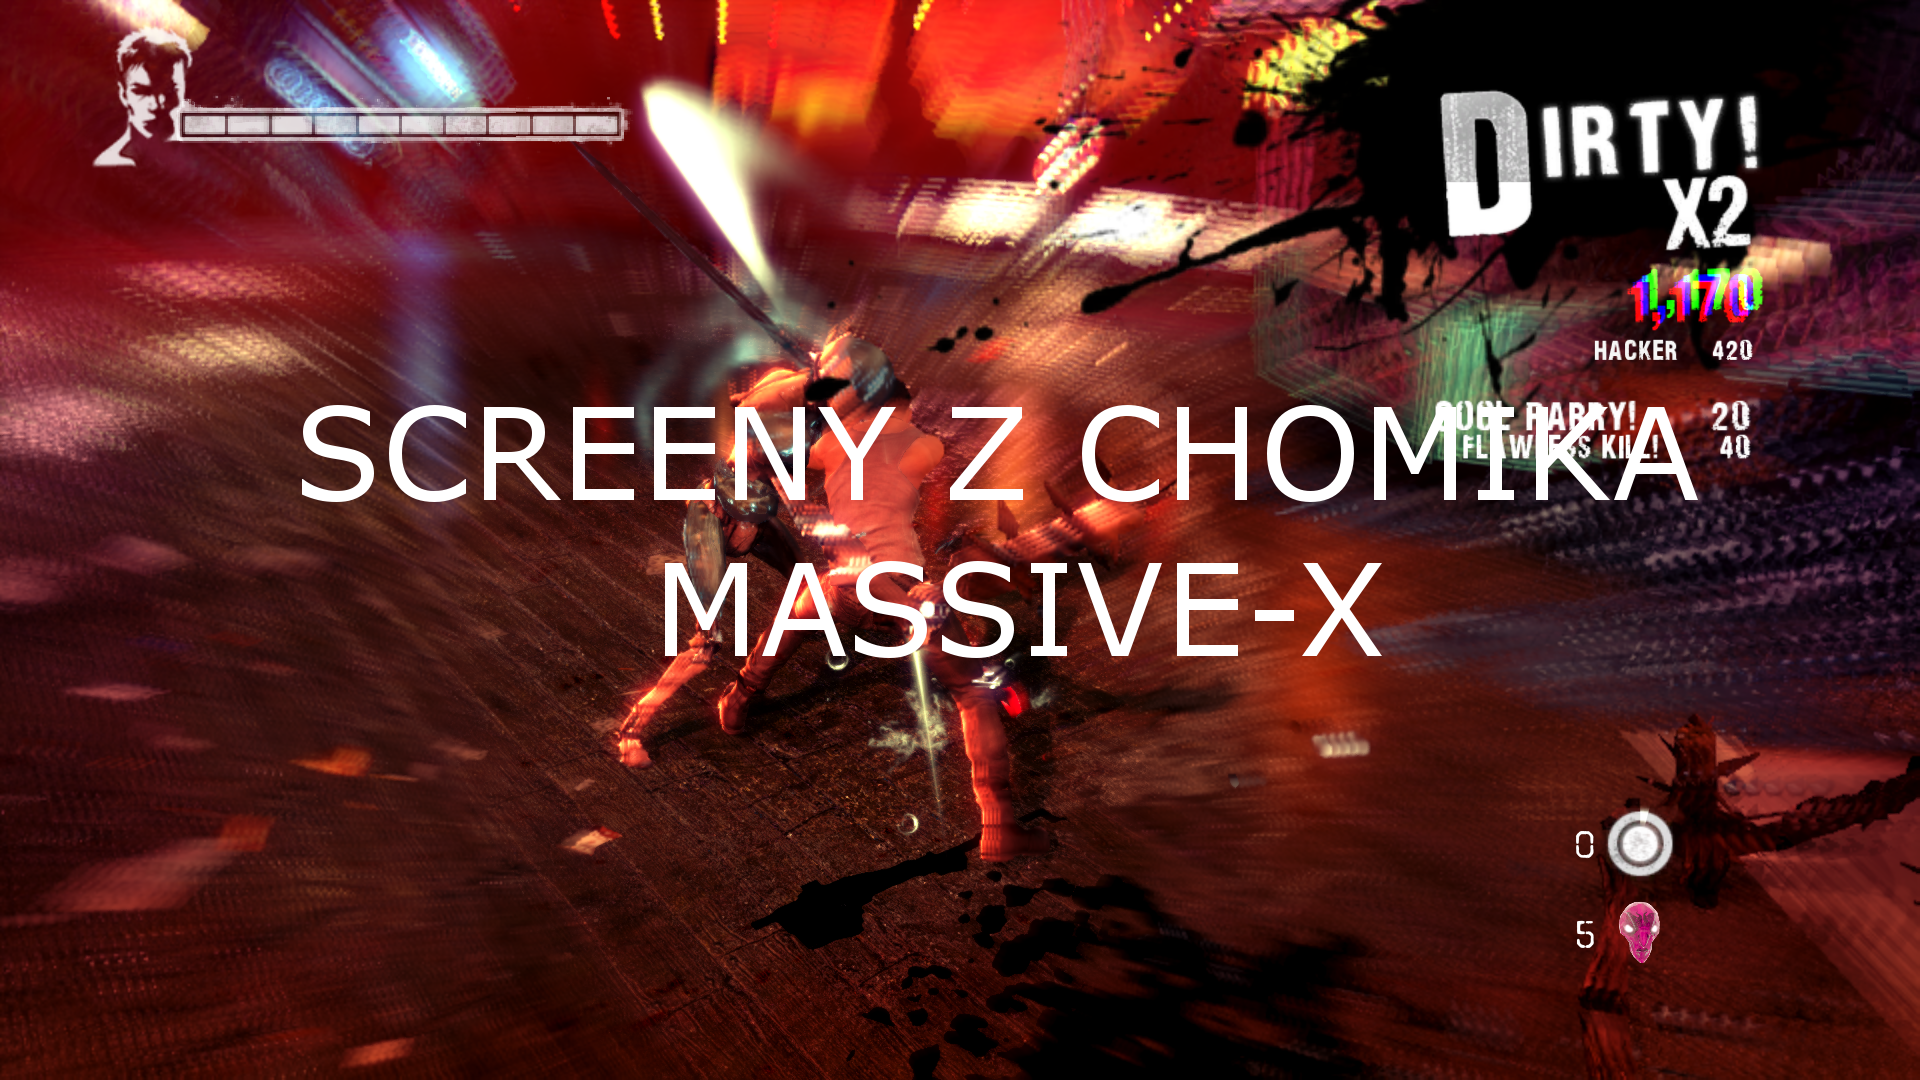  DMC Devil May Cry PL  PC  - DMC-DevilMayCry 2013-01-25 10-32-33-86.png